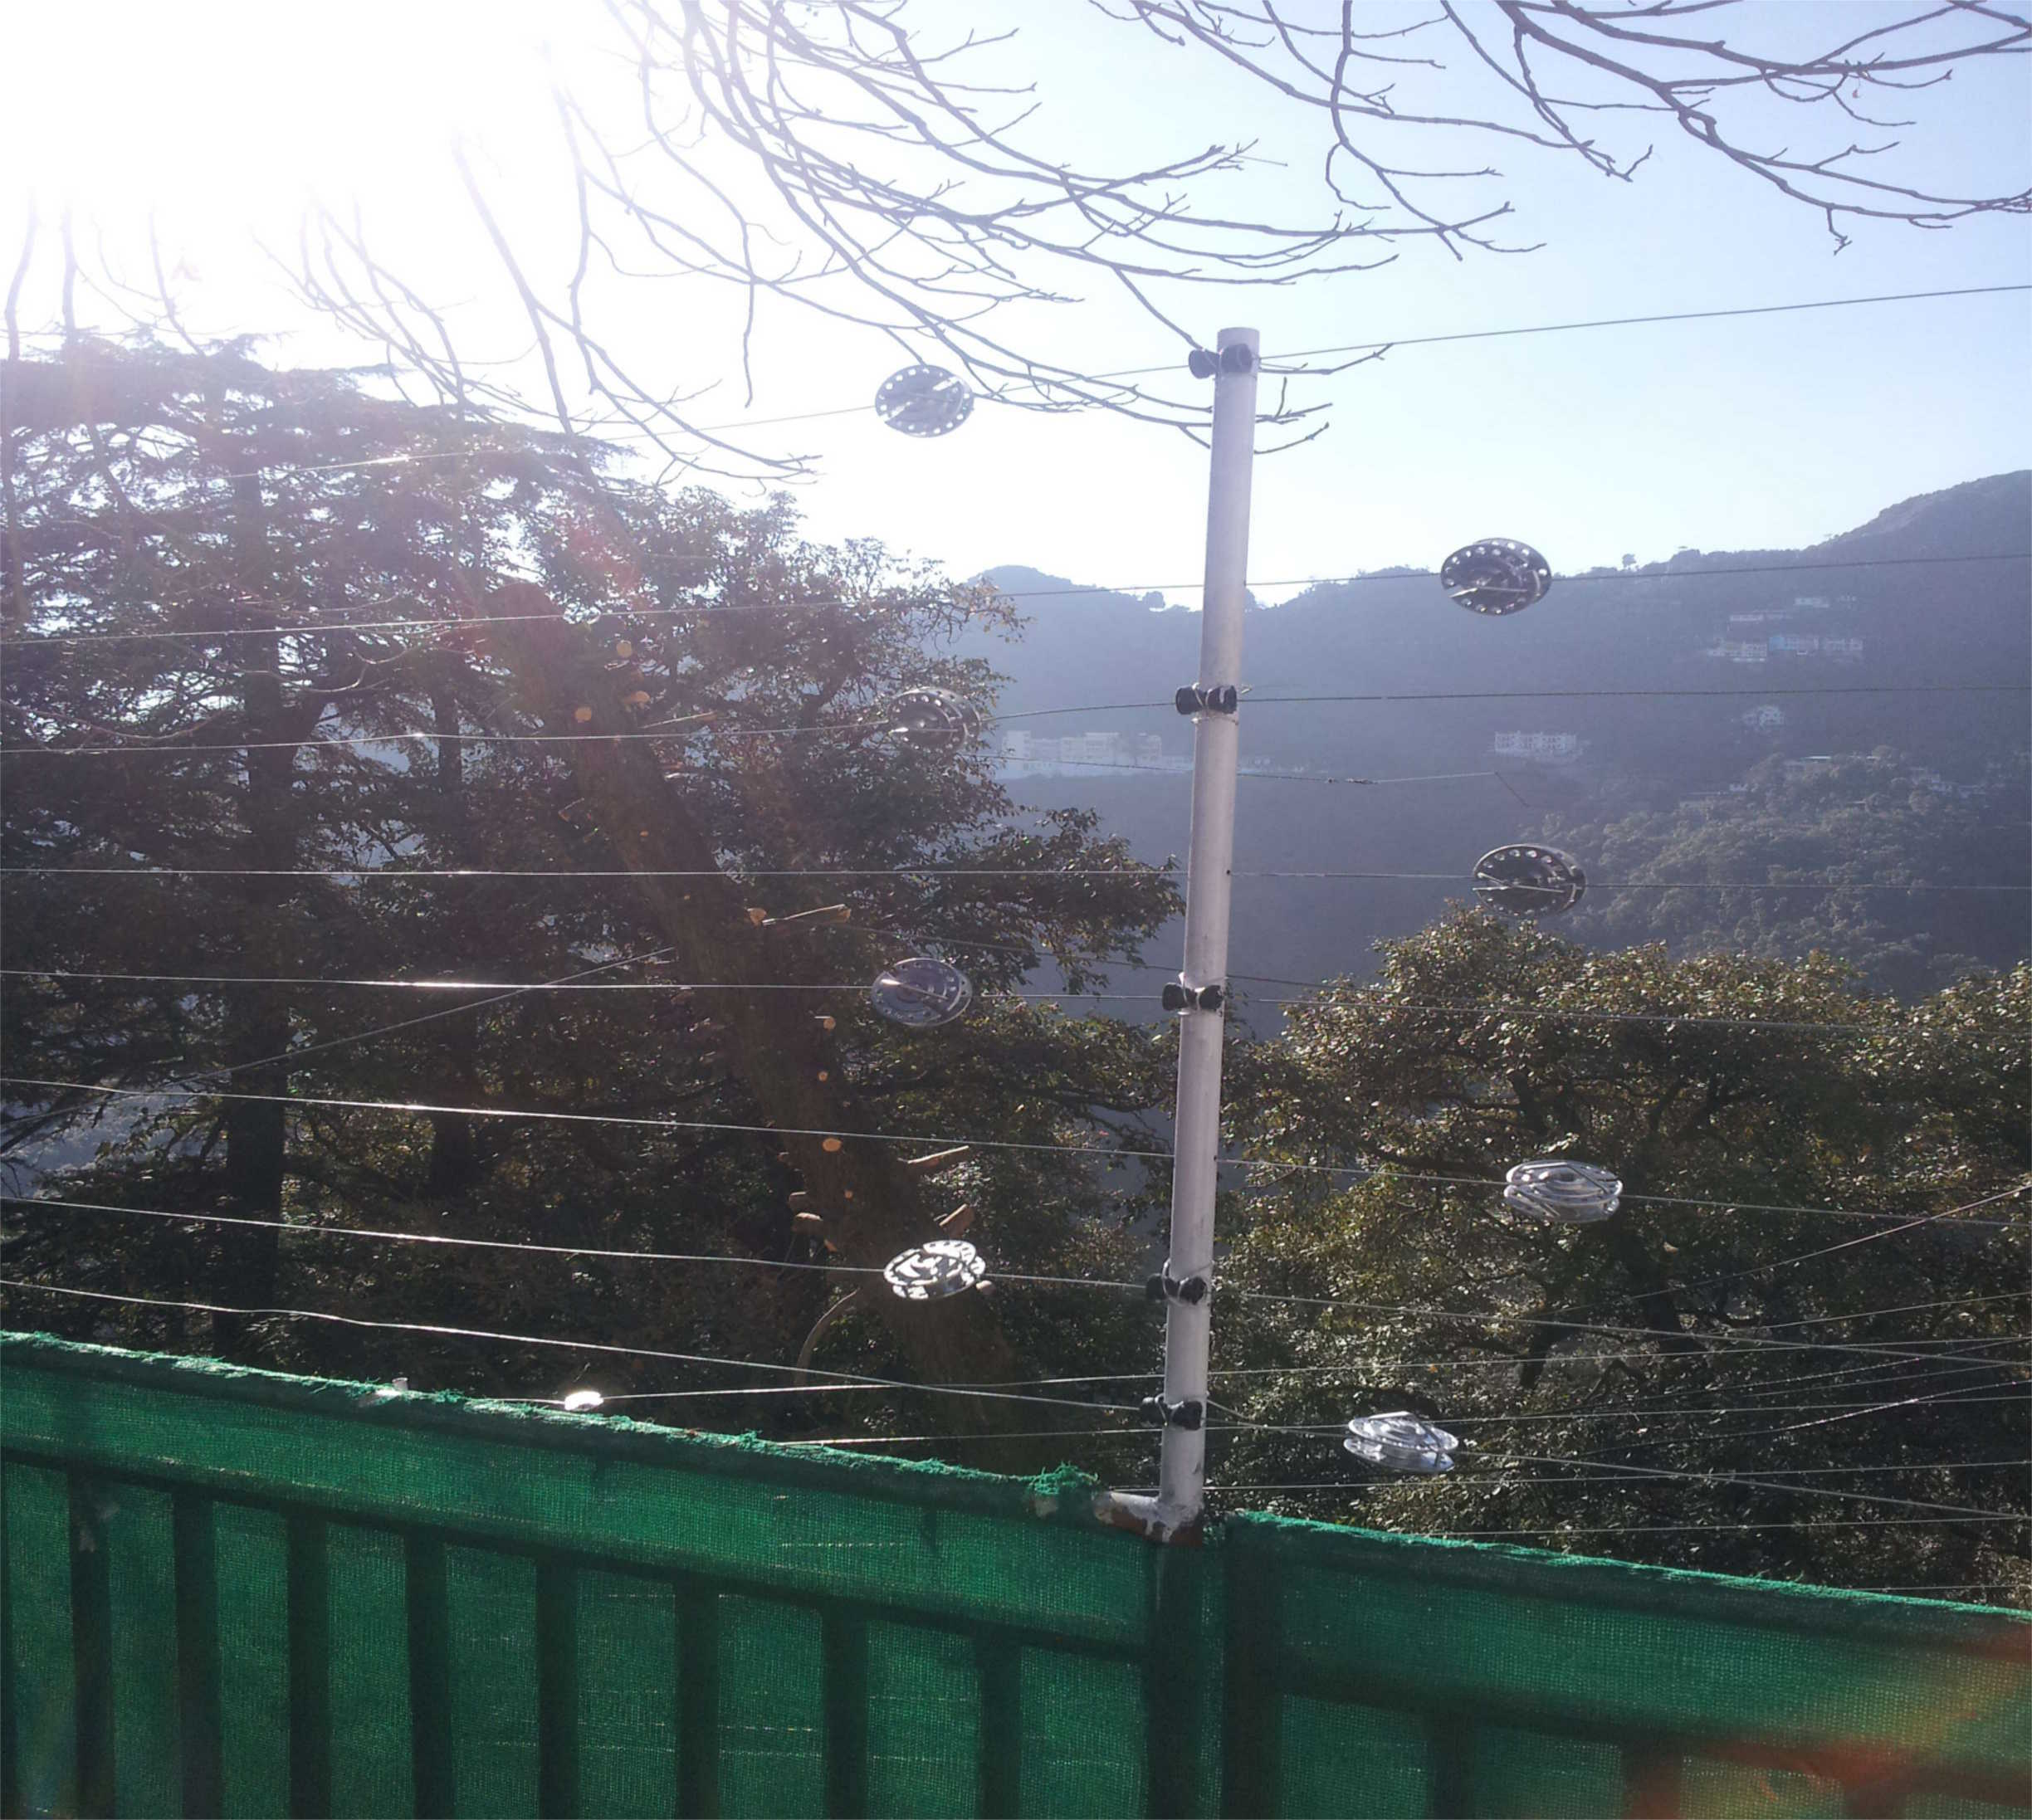 Solar Fence in Mussoorie, no trepassing